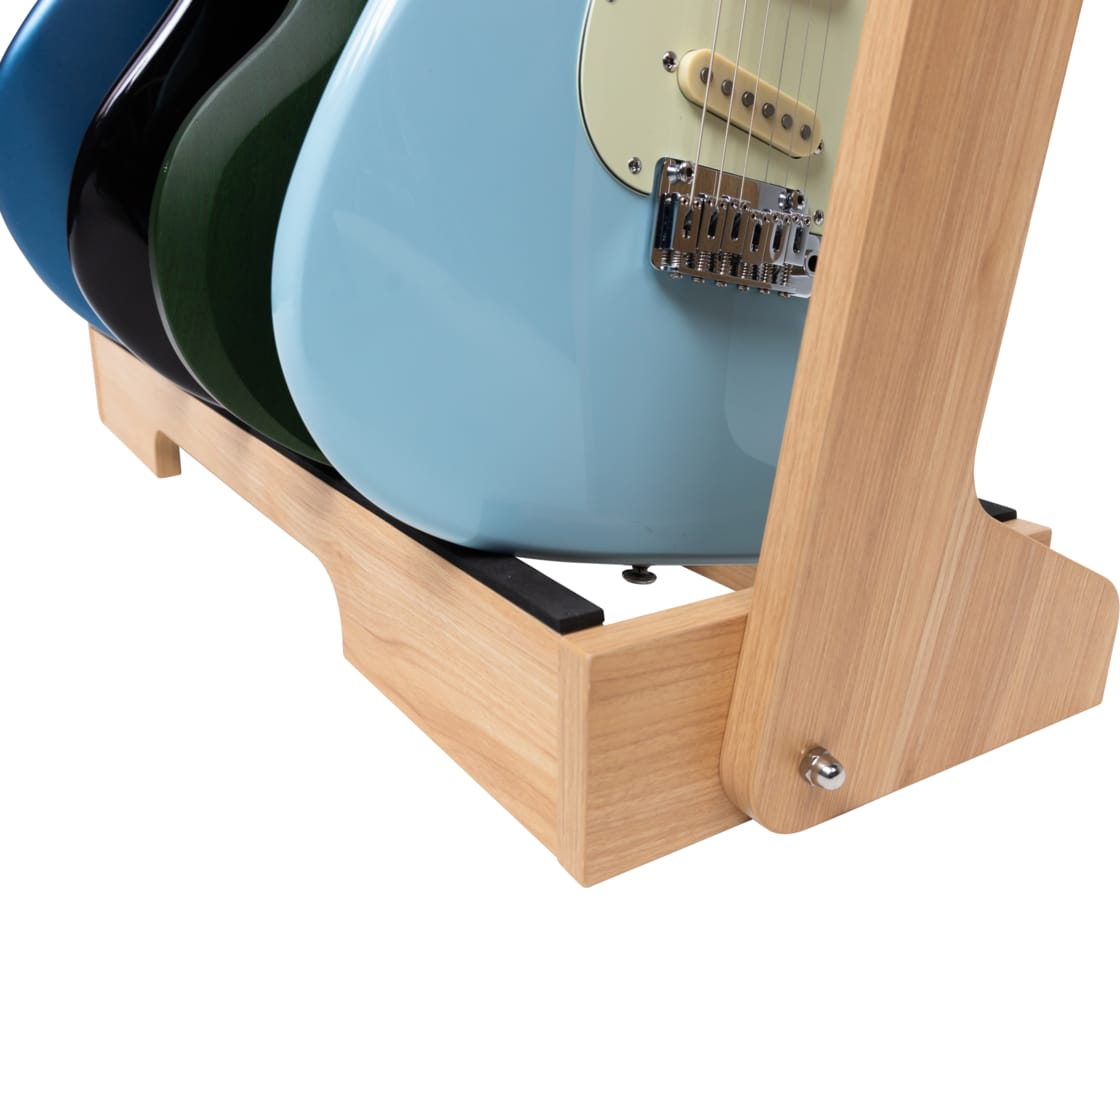 Wooden Guitar Stand, Guitar Rack Stand